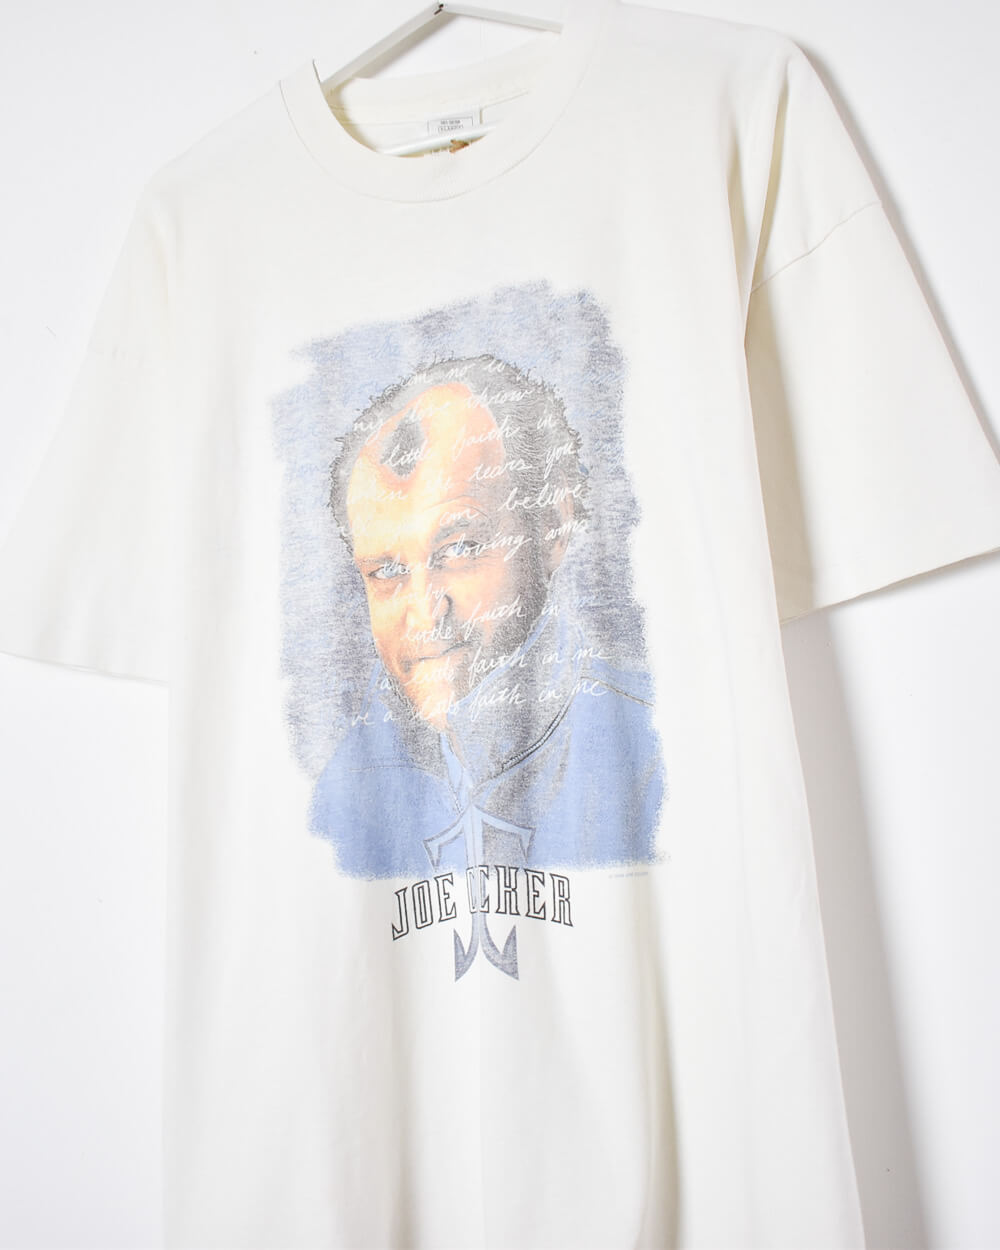 White Joe Cocker 1995 Summer Tour T-Shirt - X-Large